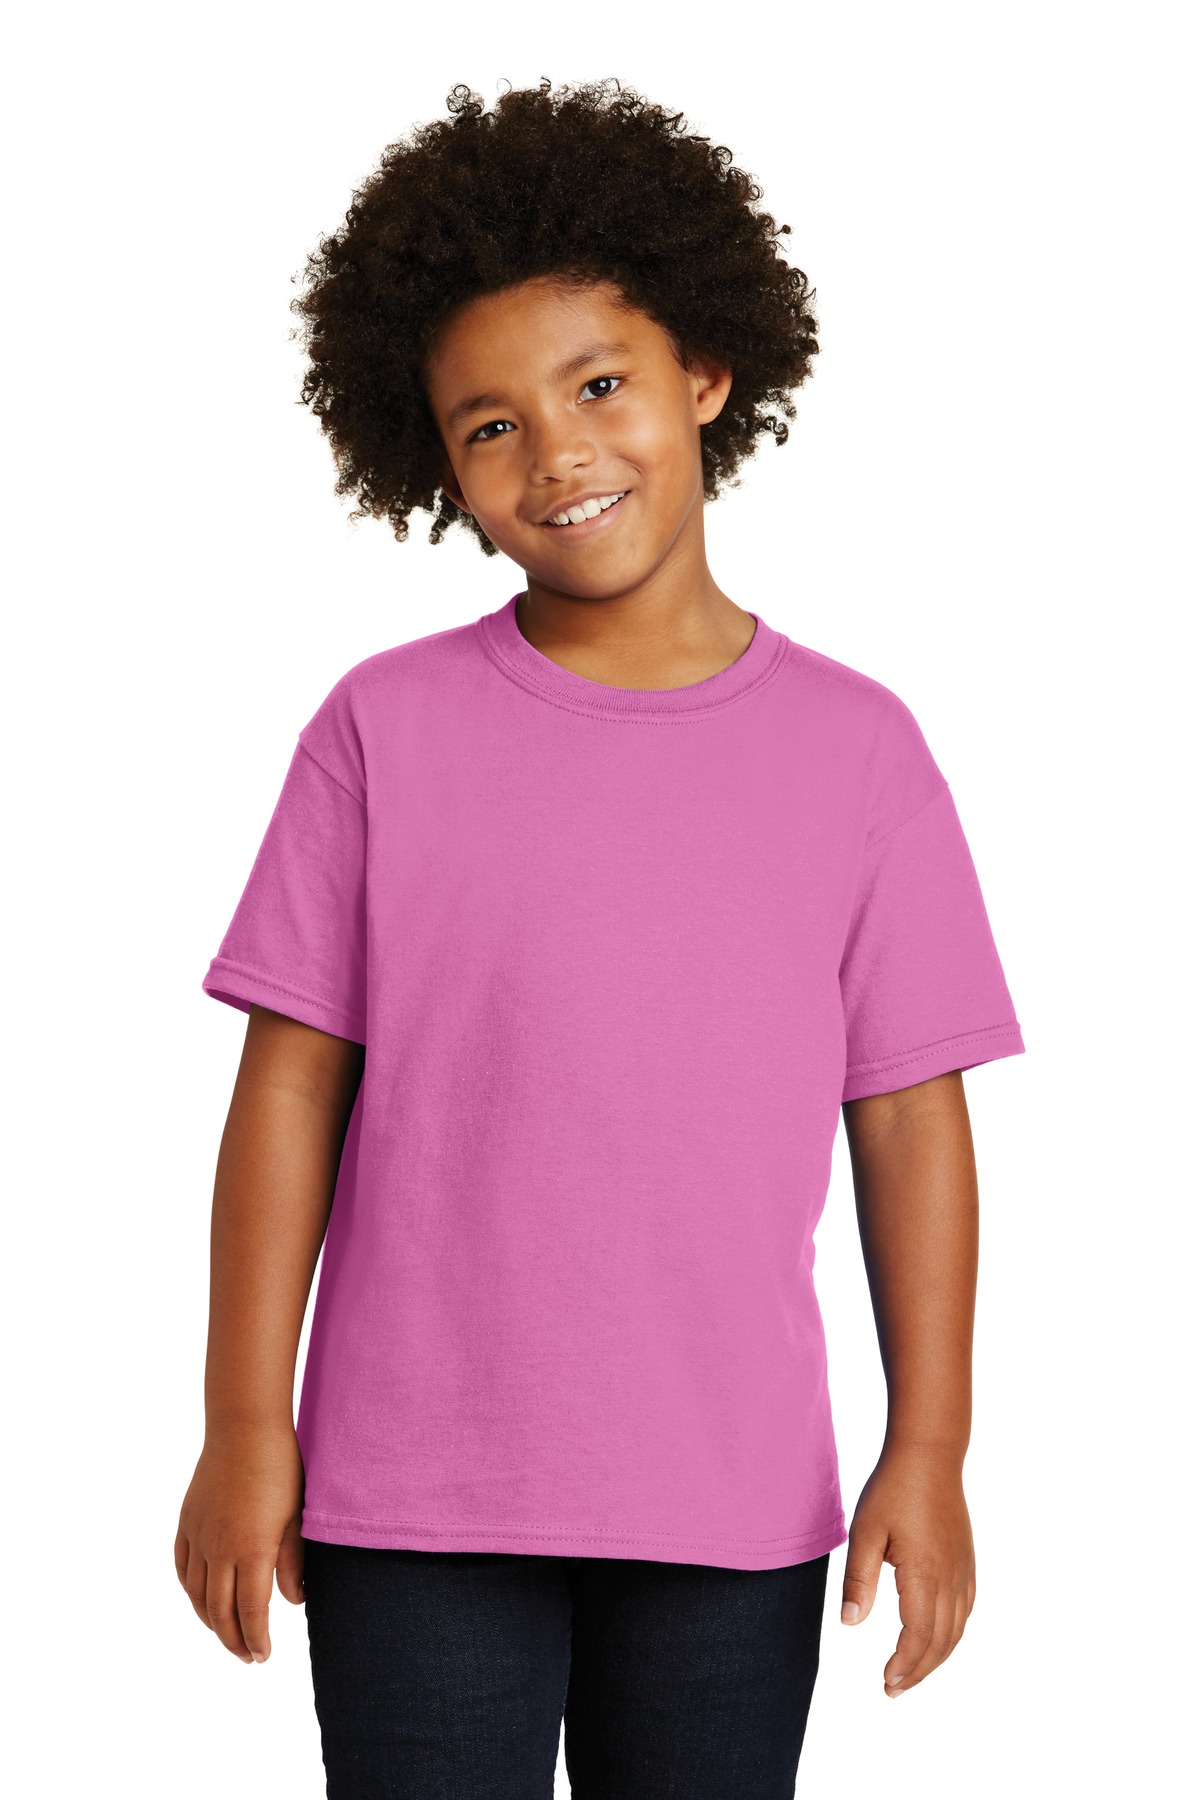 Artix - Big Girls T-Shirts and Tank Tops, up to Big Girls Size 24 - San Francisco - image 2 of 5